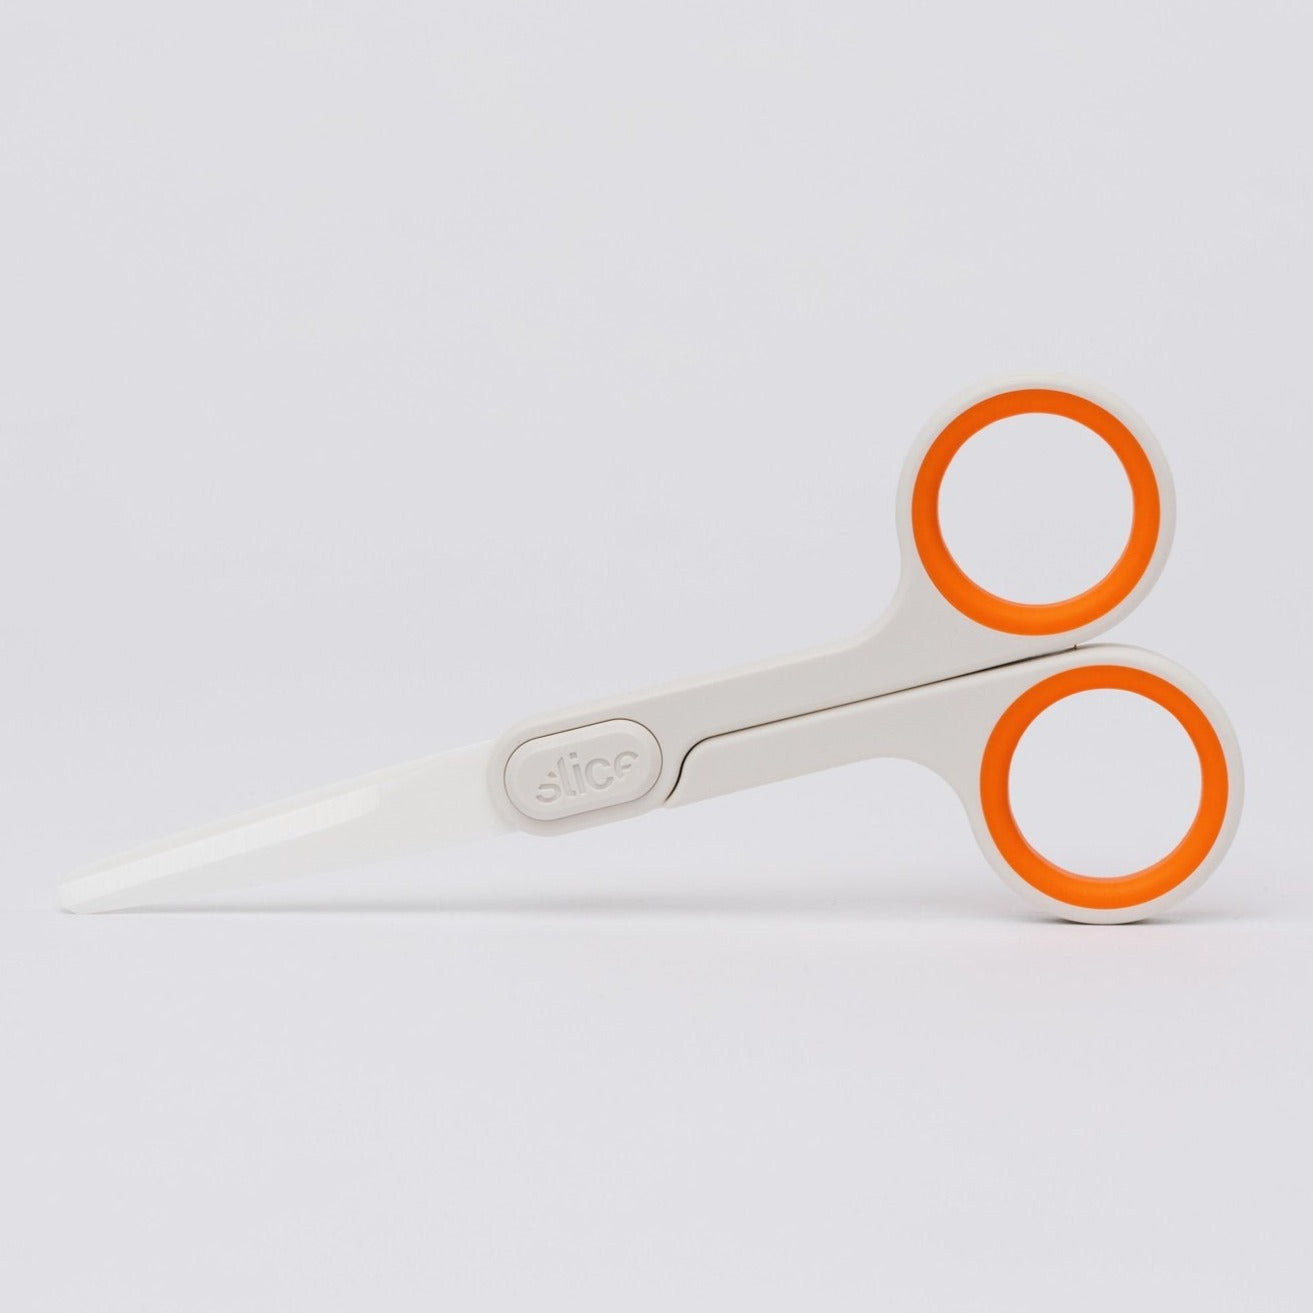 Slice】Long blade ceramic scissors (small) - Shop allex-japan